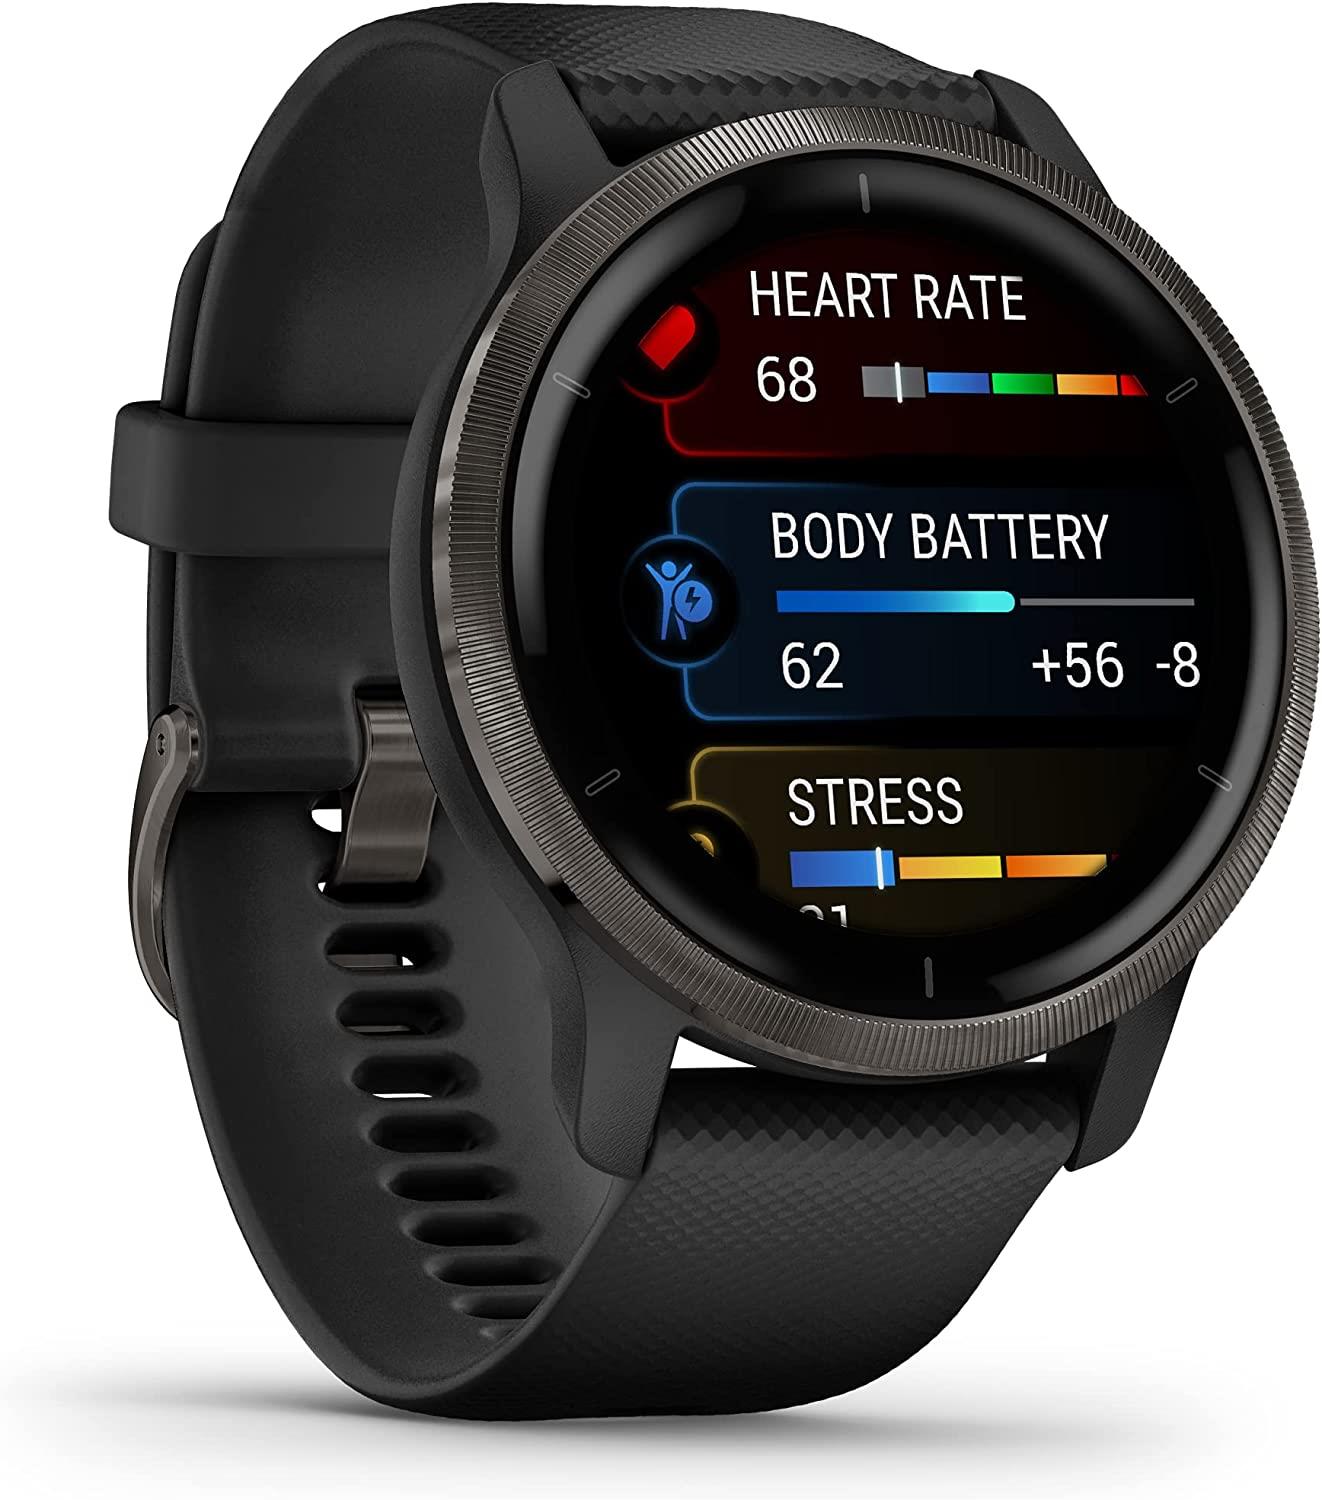 Garmin Venu 2 Smartwatch Heart Rate Monitor GPS Activity Watch - Black Slate